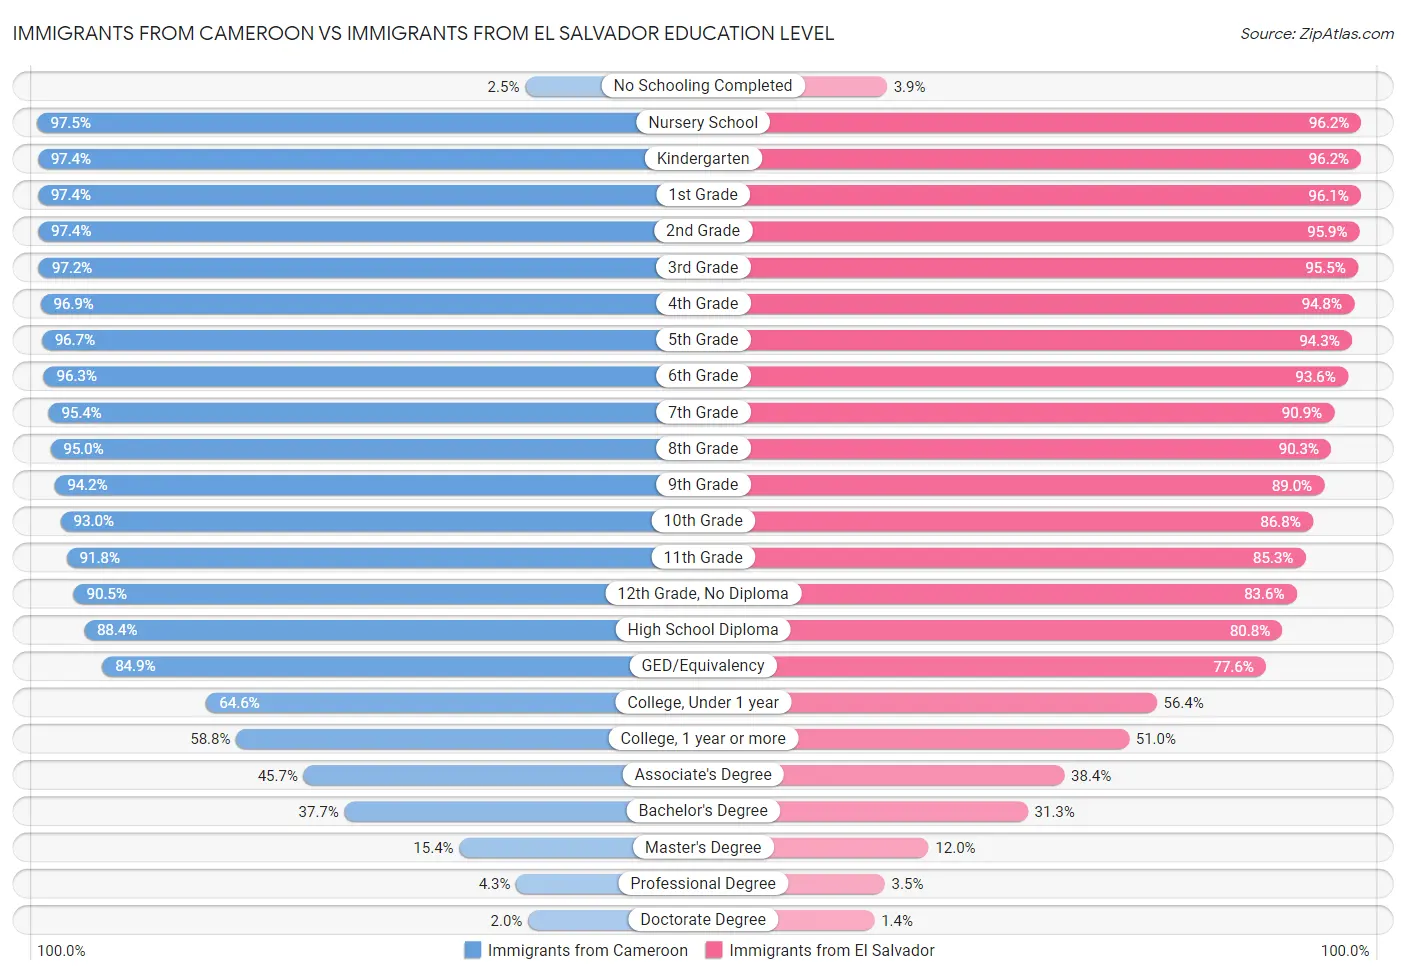 Immigrants from Cameroon vs Immigrants from El Salvador Education Level